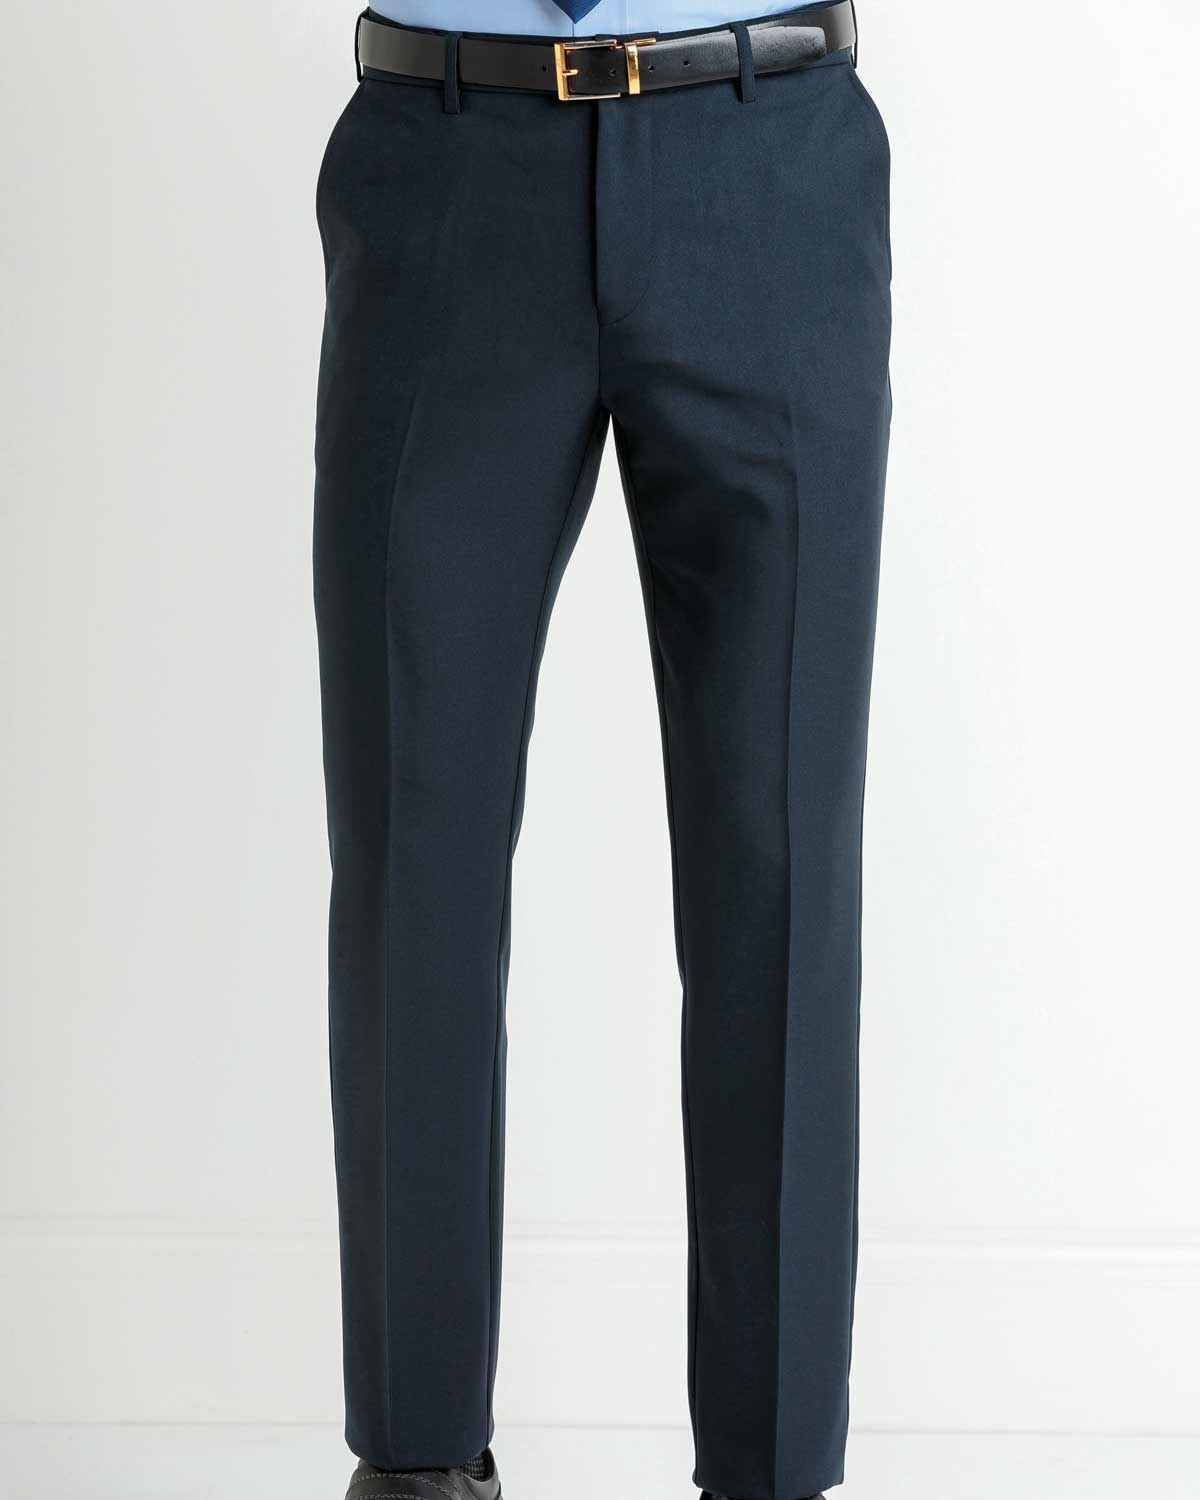 Buy Jet black Trousers  Pants for Men by NETPLAY Online  Ajiocom